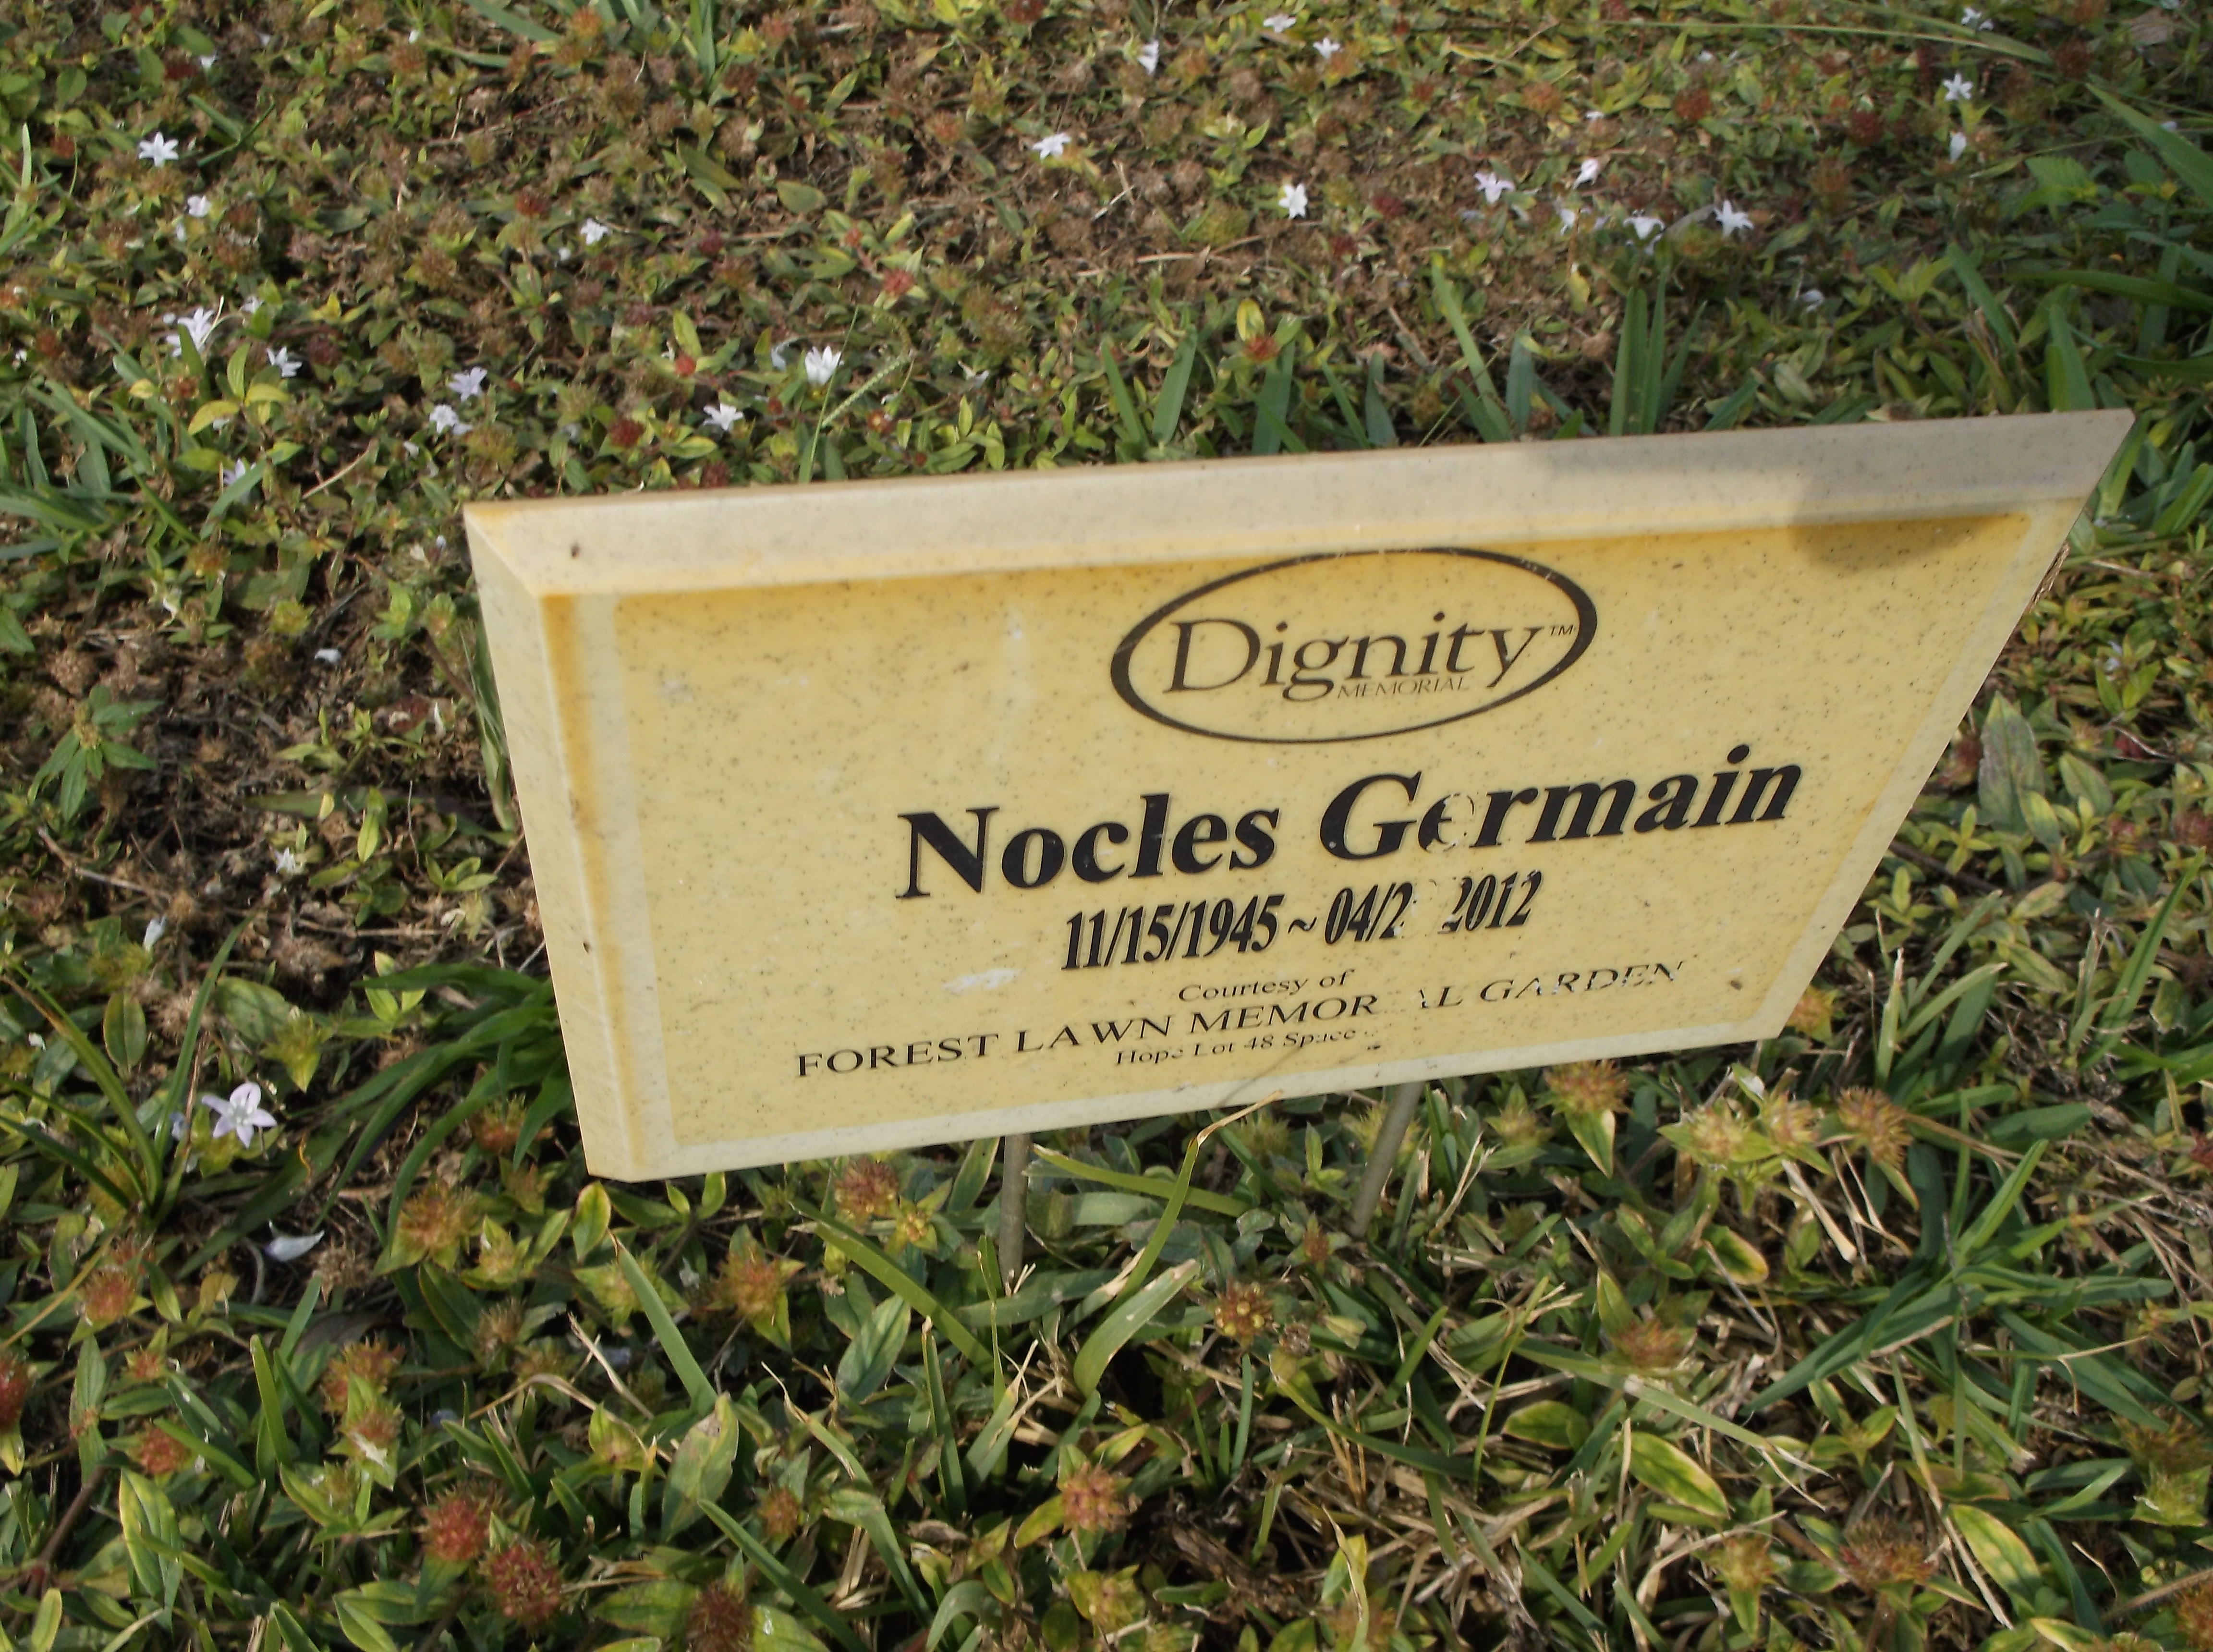 Nocles Germain